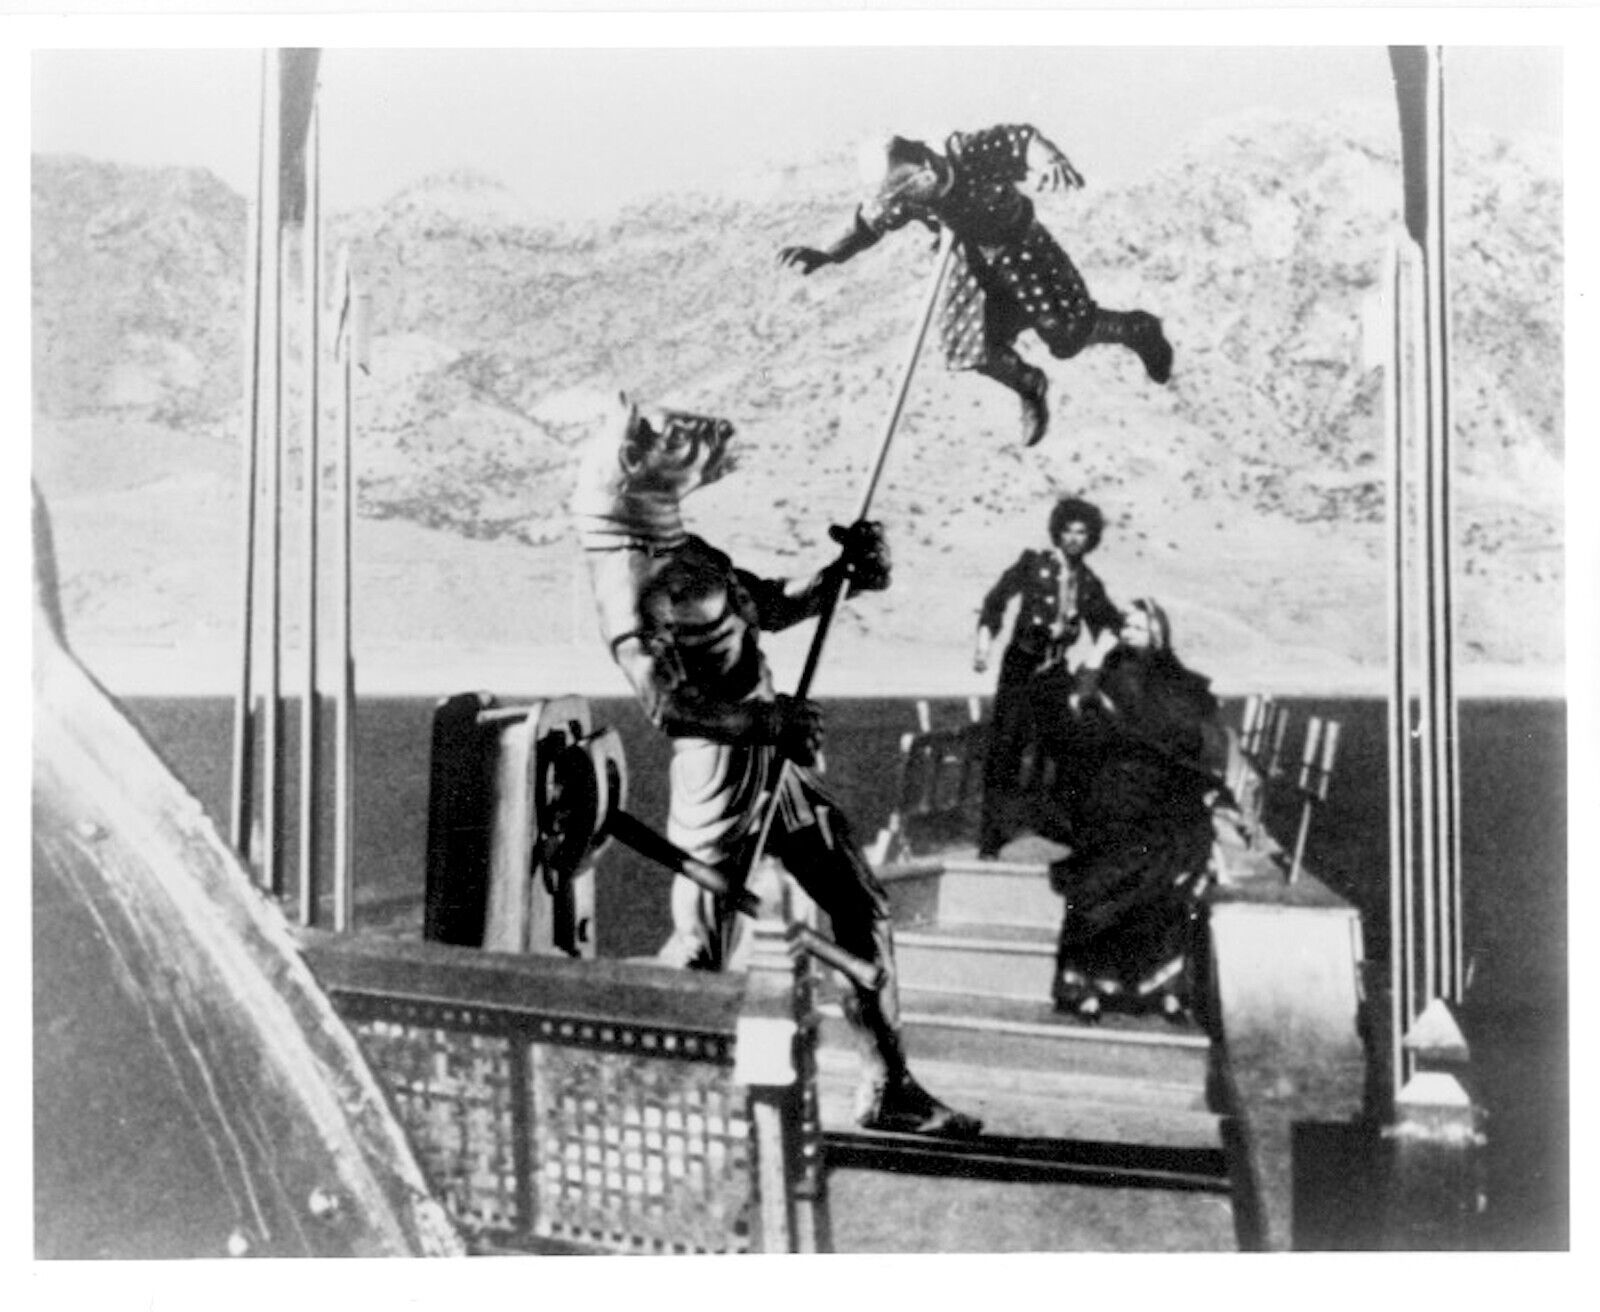 1977’s SINBAD & THE EYE OF THE TIGER Minaton javelin attack b/w 8x10 scene